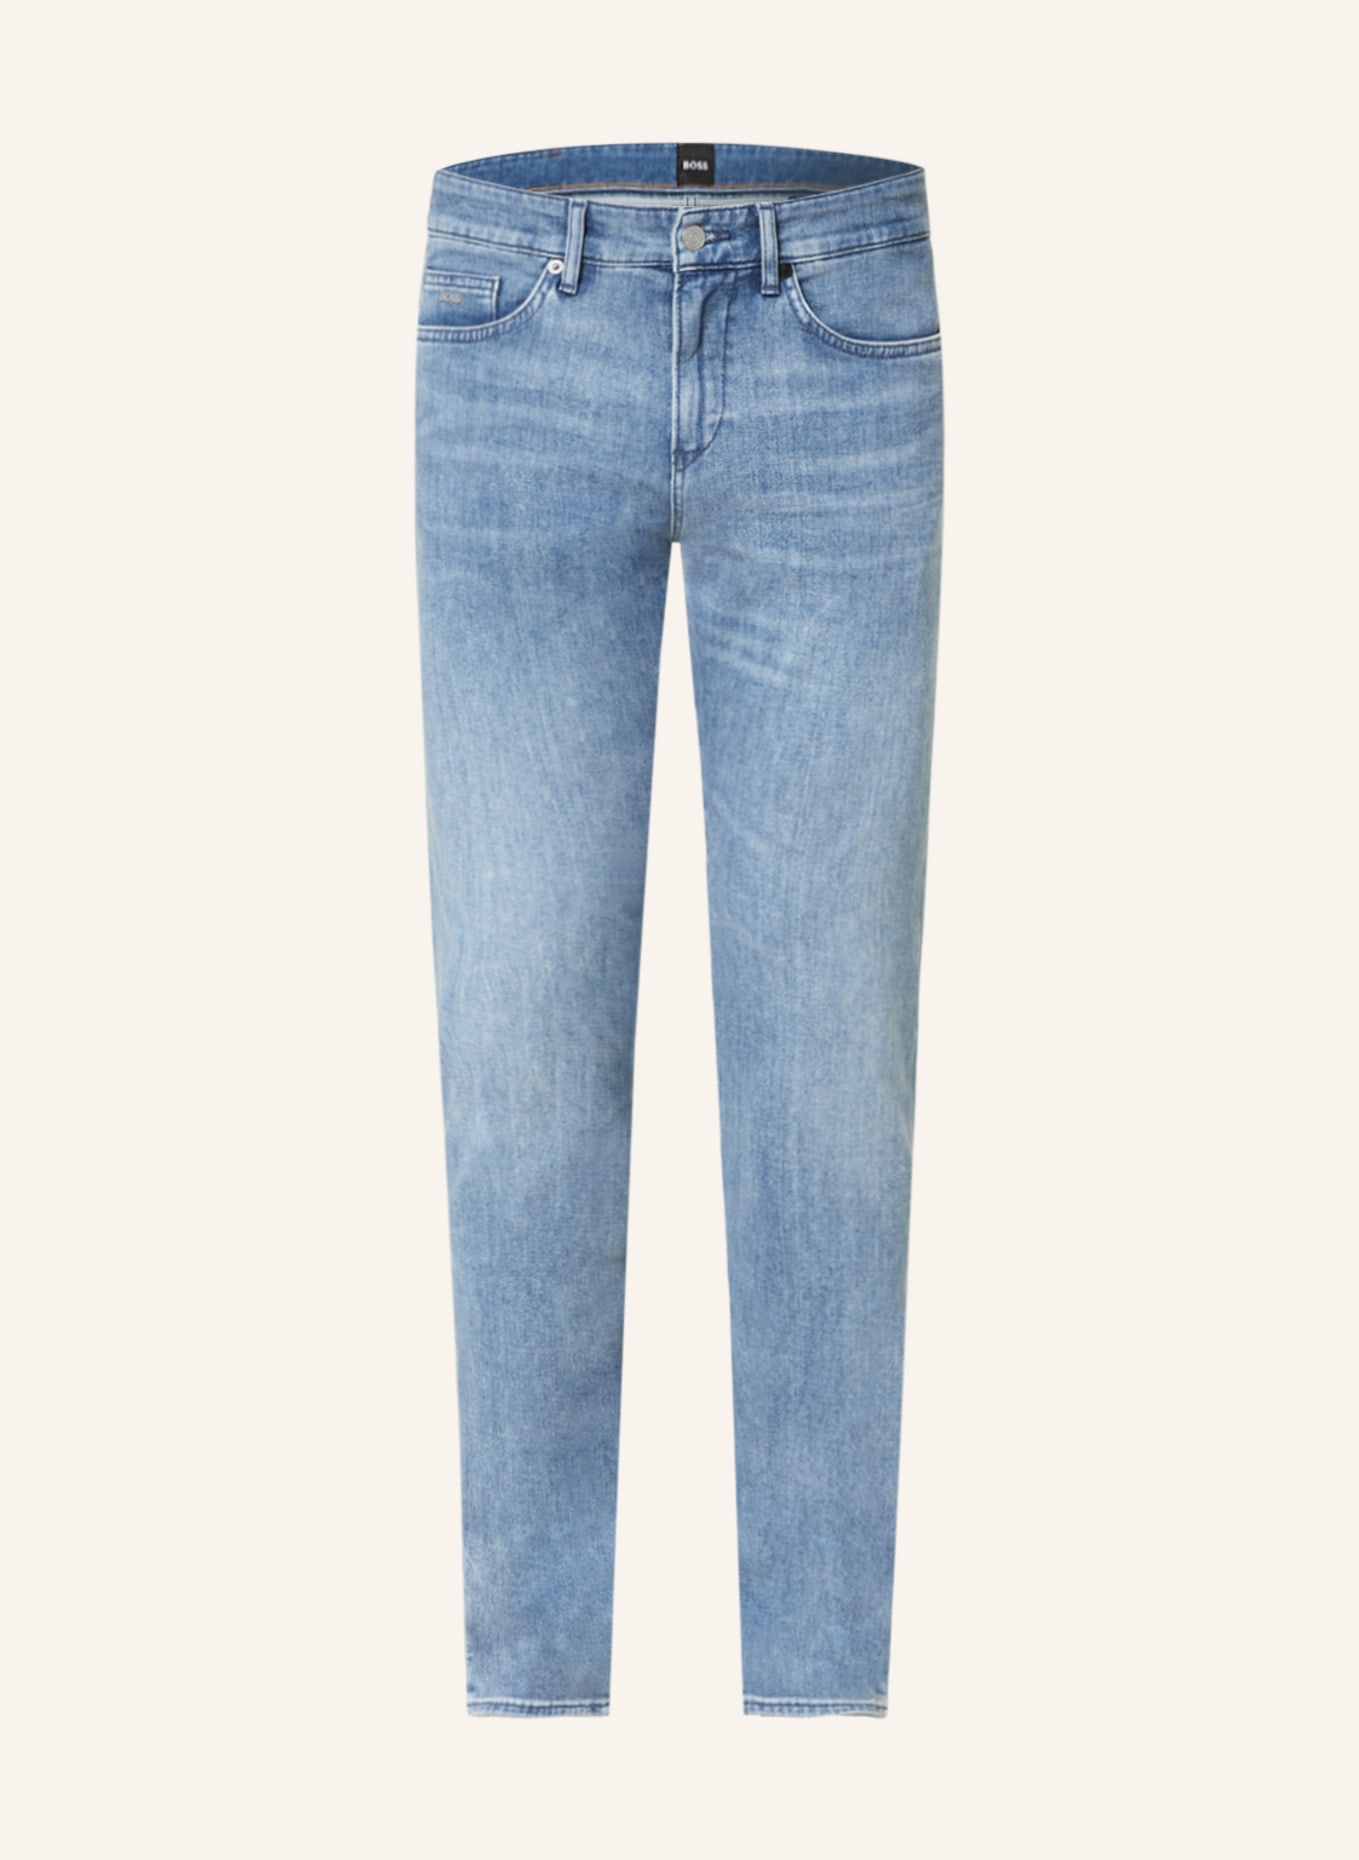 BOSS Jeans DELAWARE3 Slim Fit, Farbe: 445 TURQUOISE/AQUA (Bild 1)